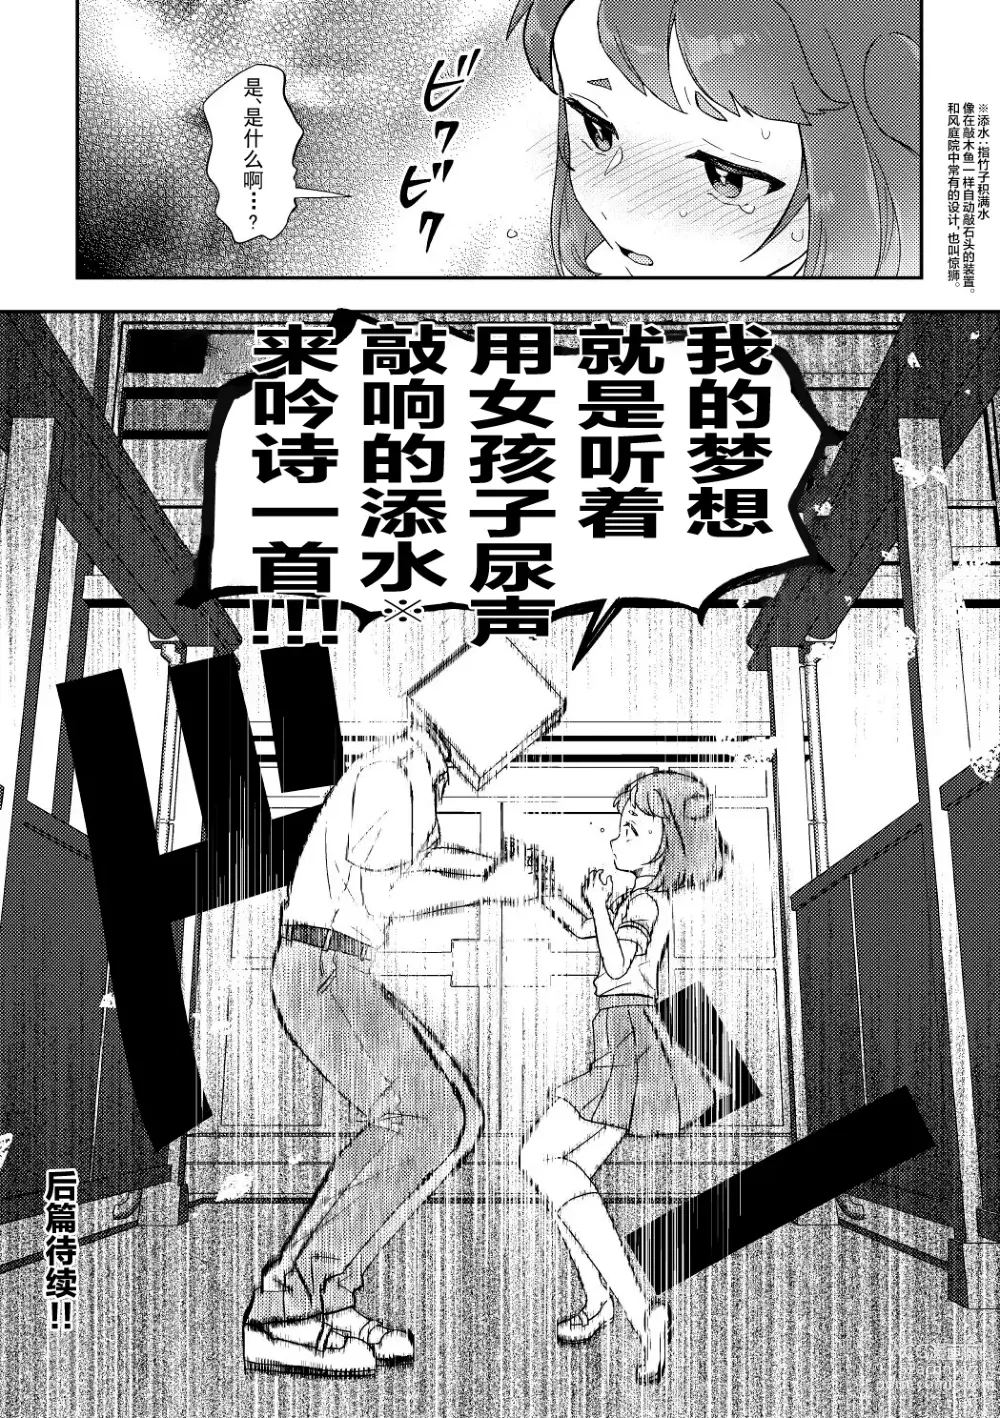 Page 14 of doujinshi Banmeshi Ogoru kara Yurushite yo Zenpen